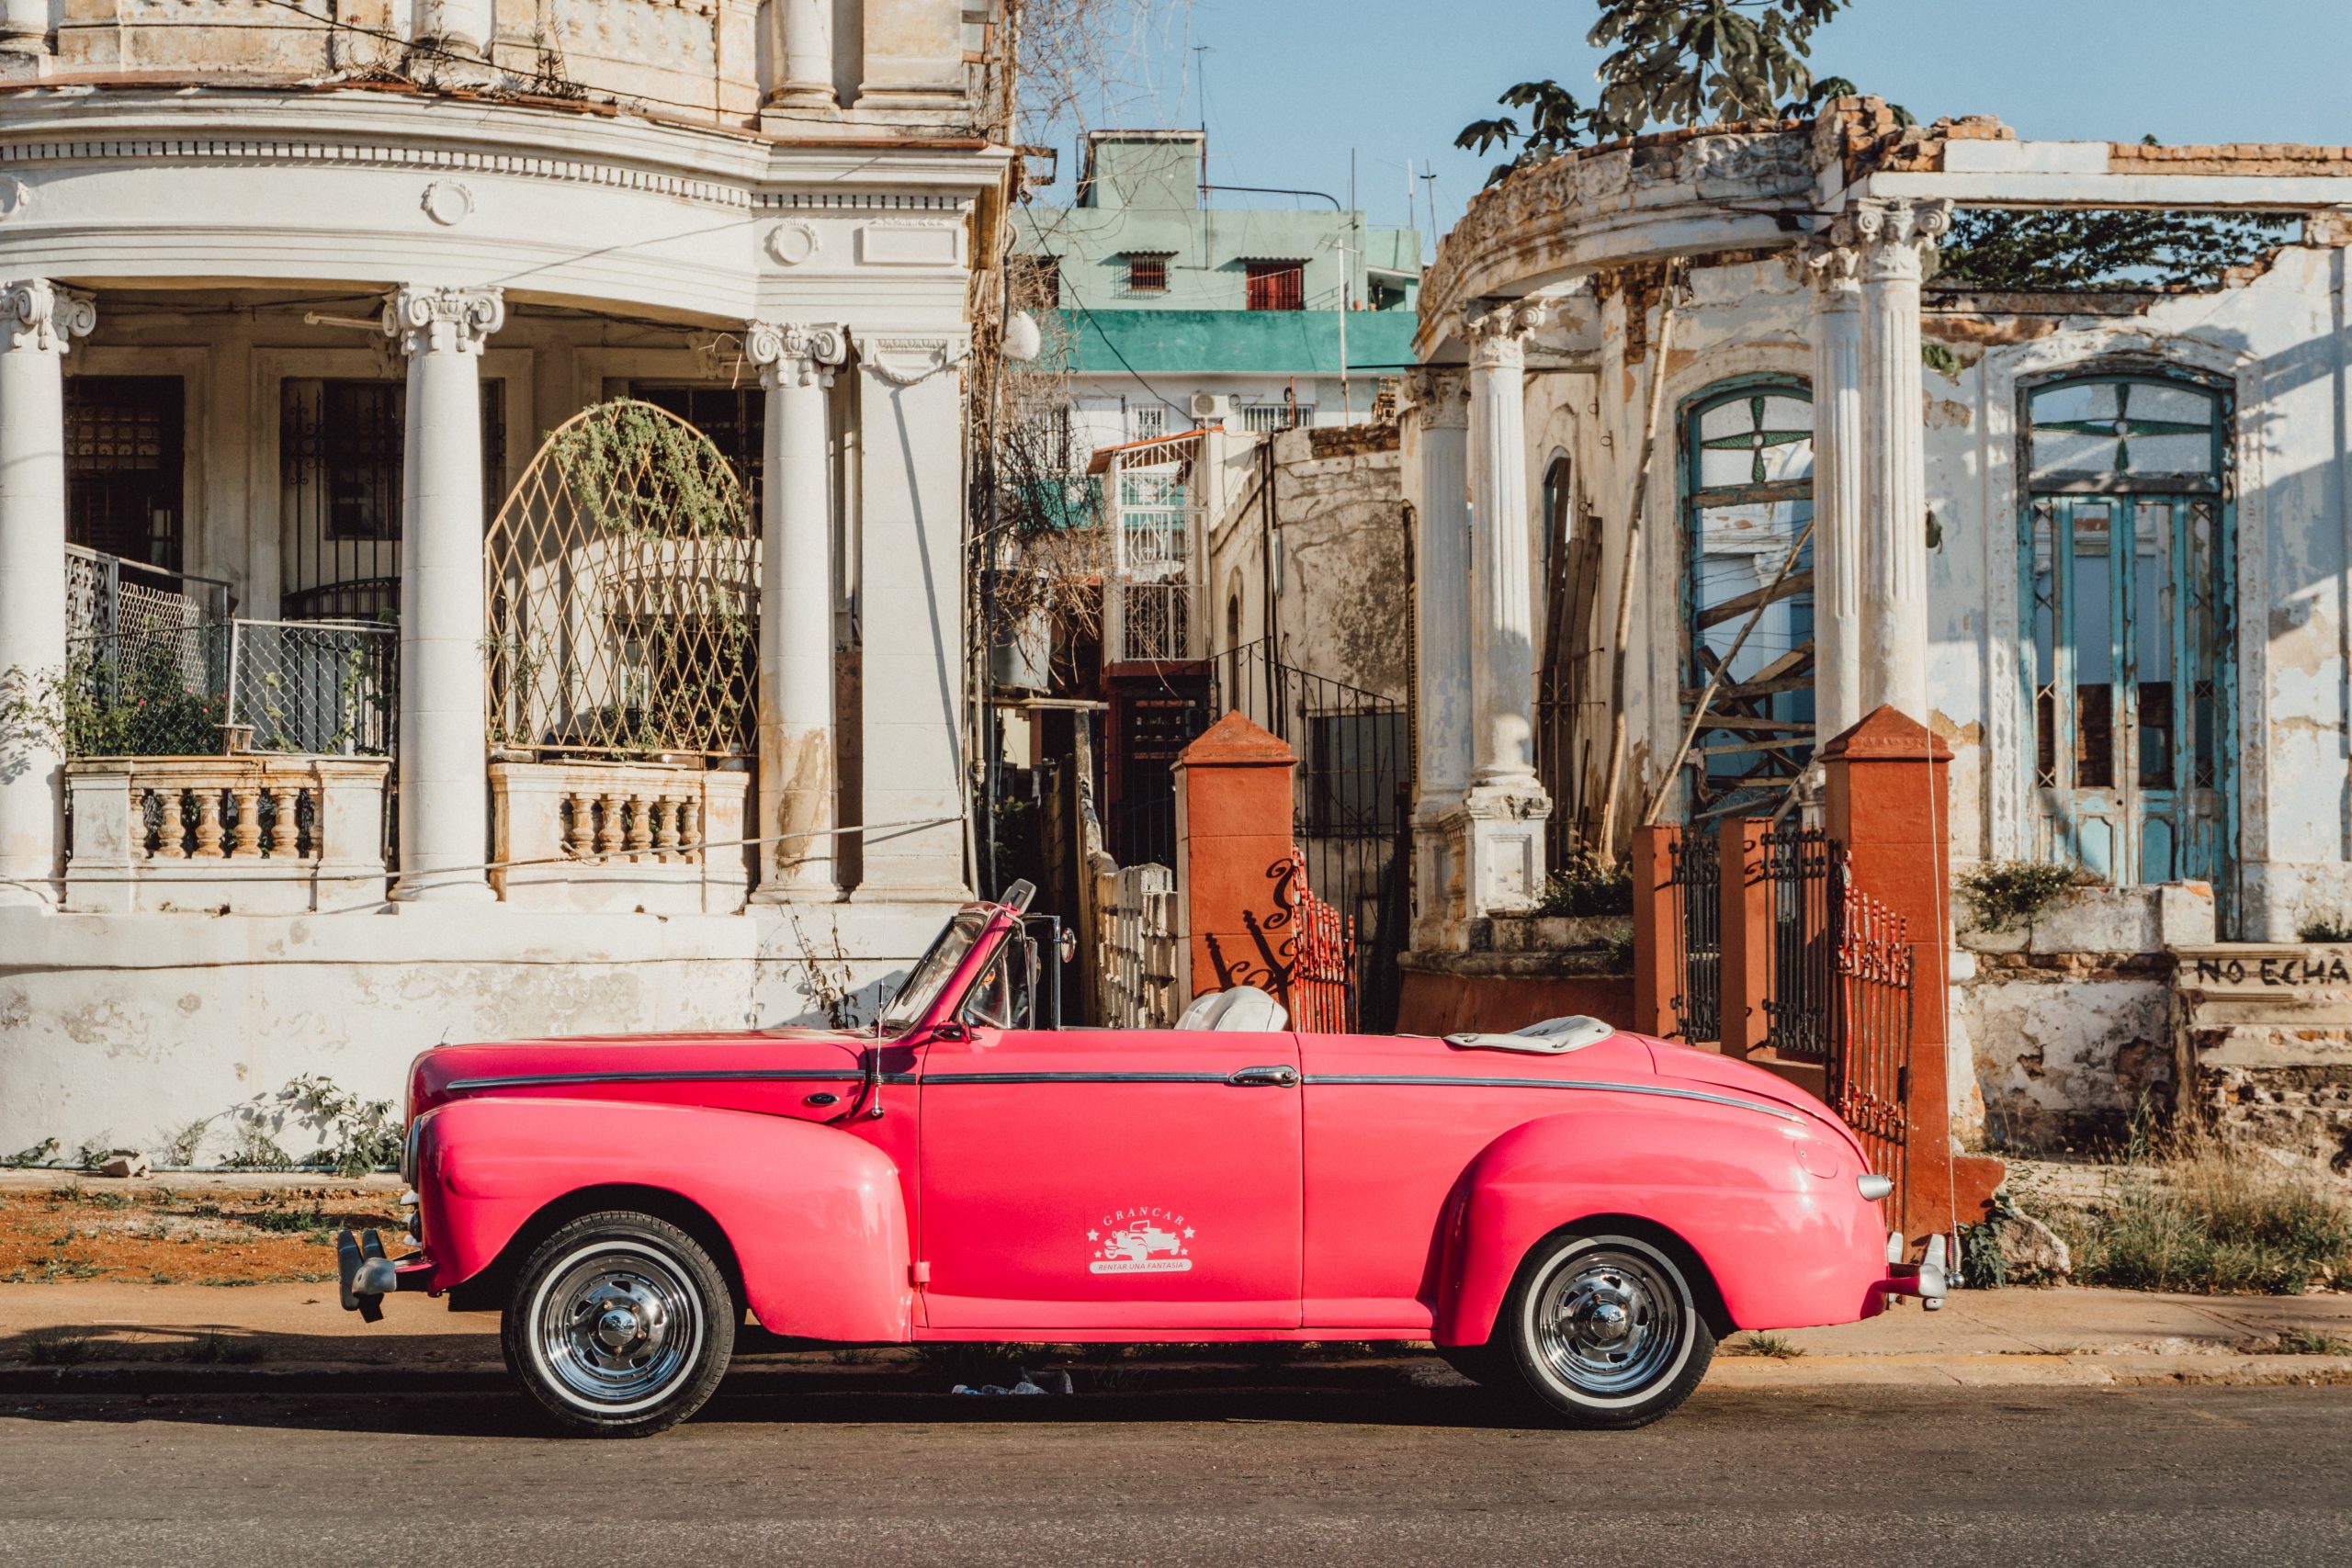 cuban classic car